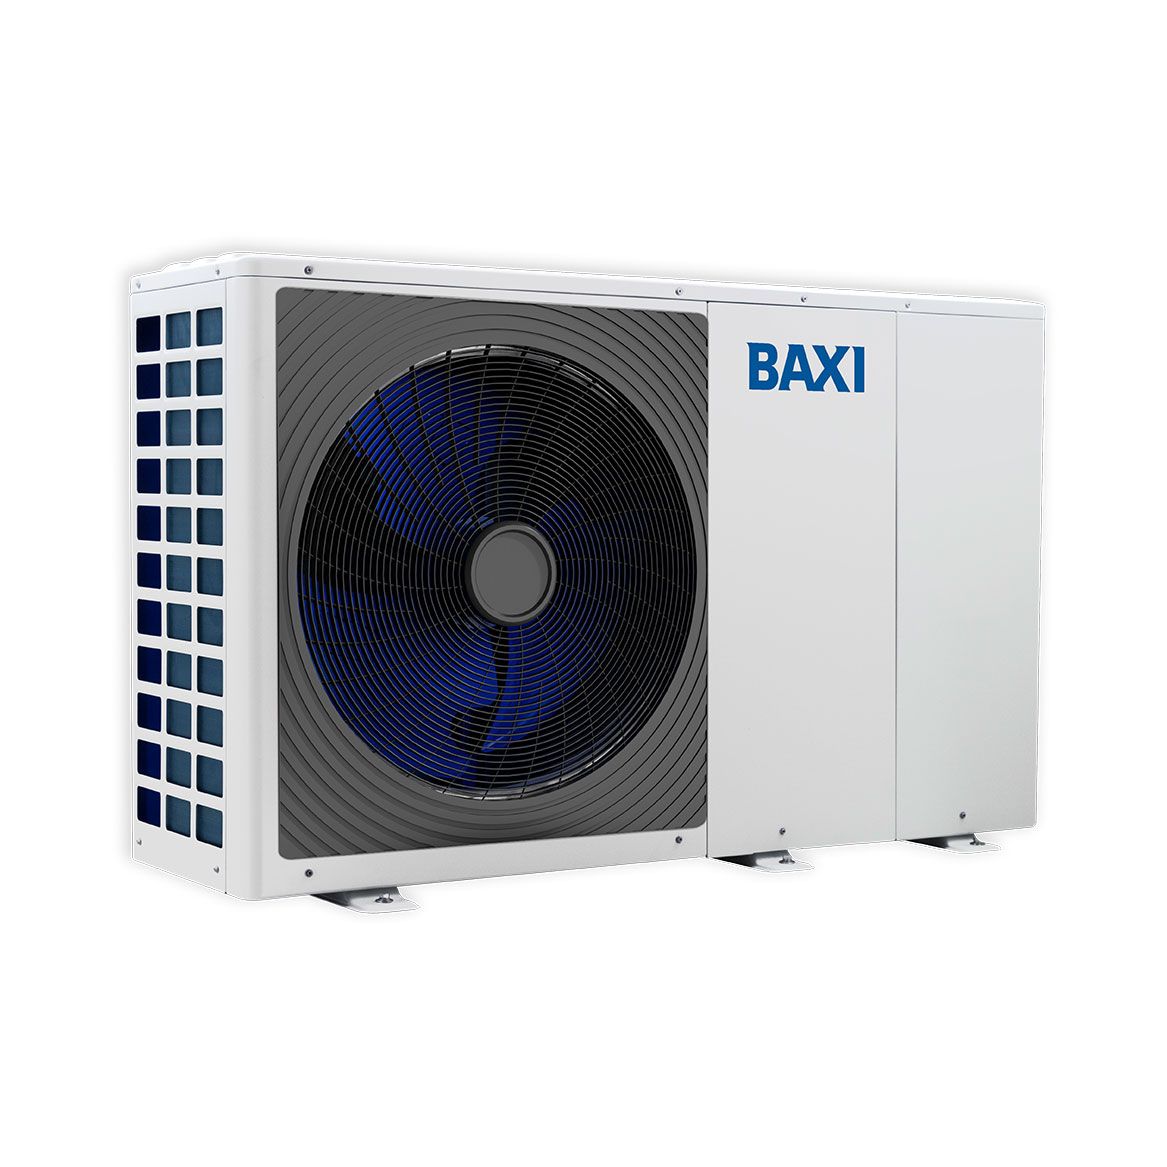 BAXI Auriga 10A Heat Pump, Hydronic Heating